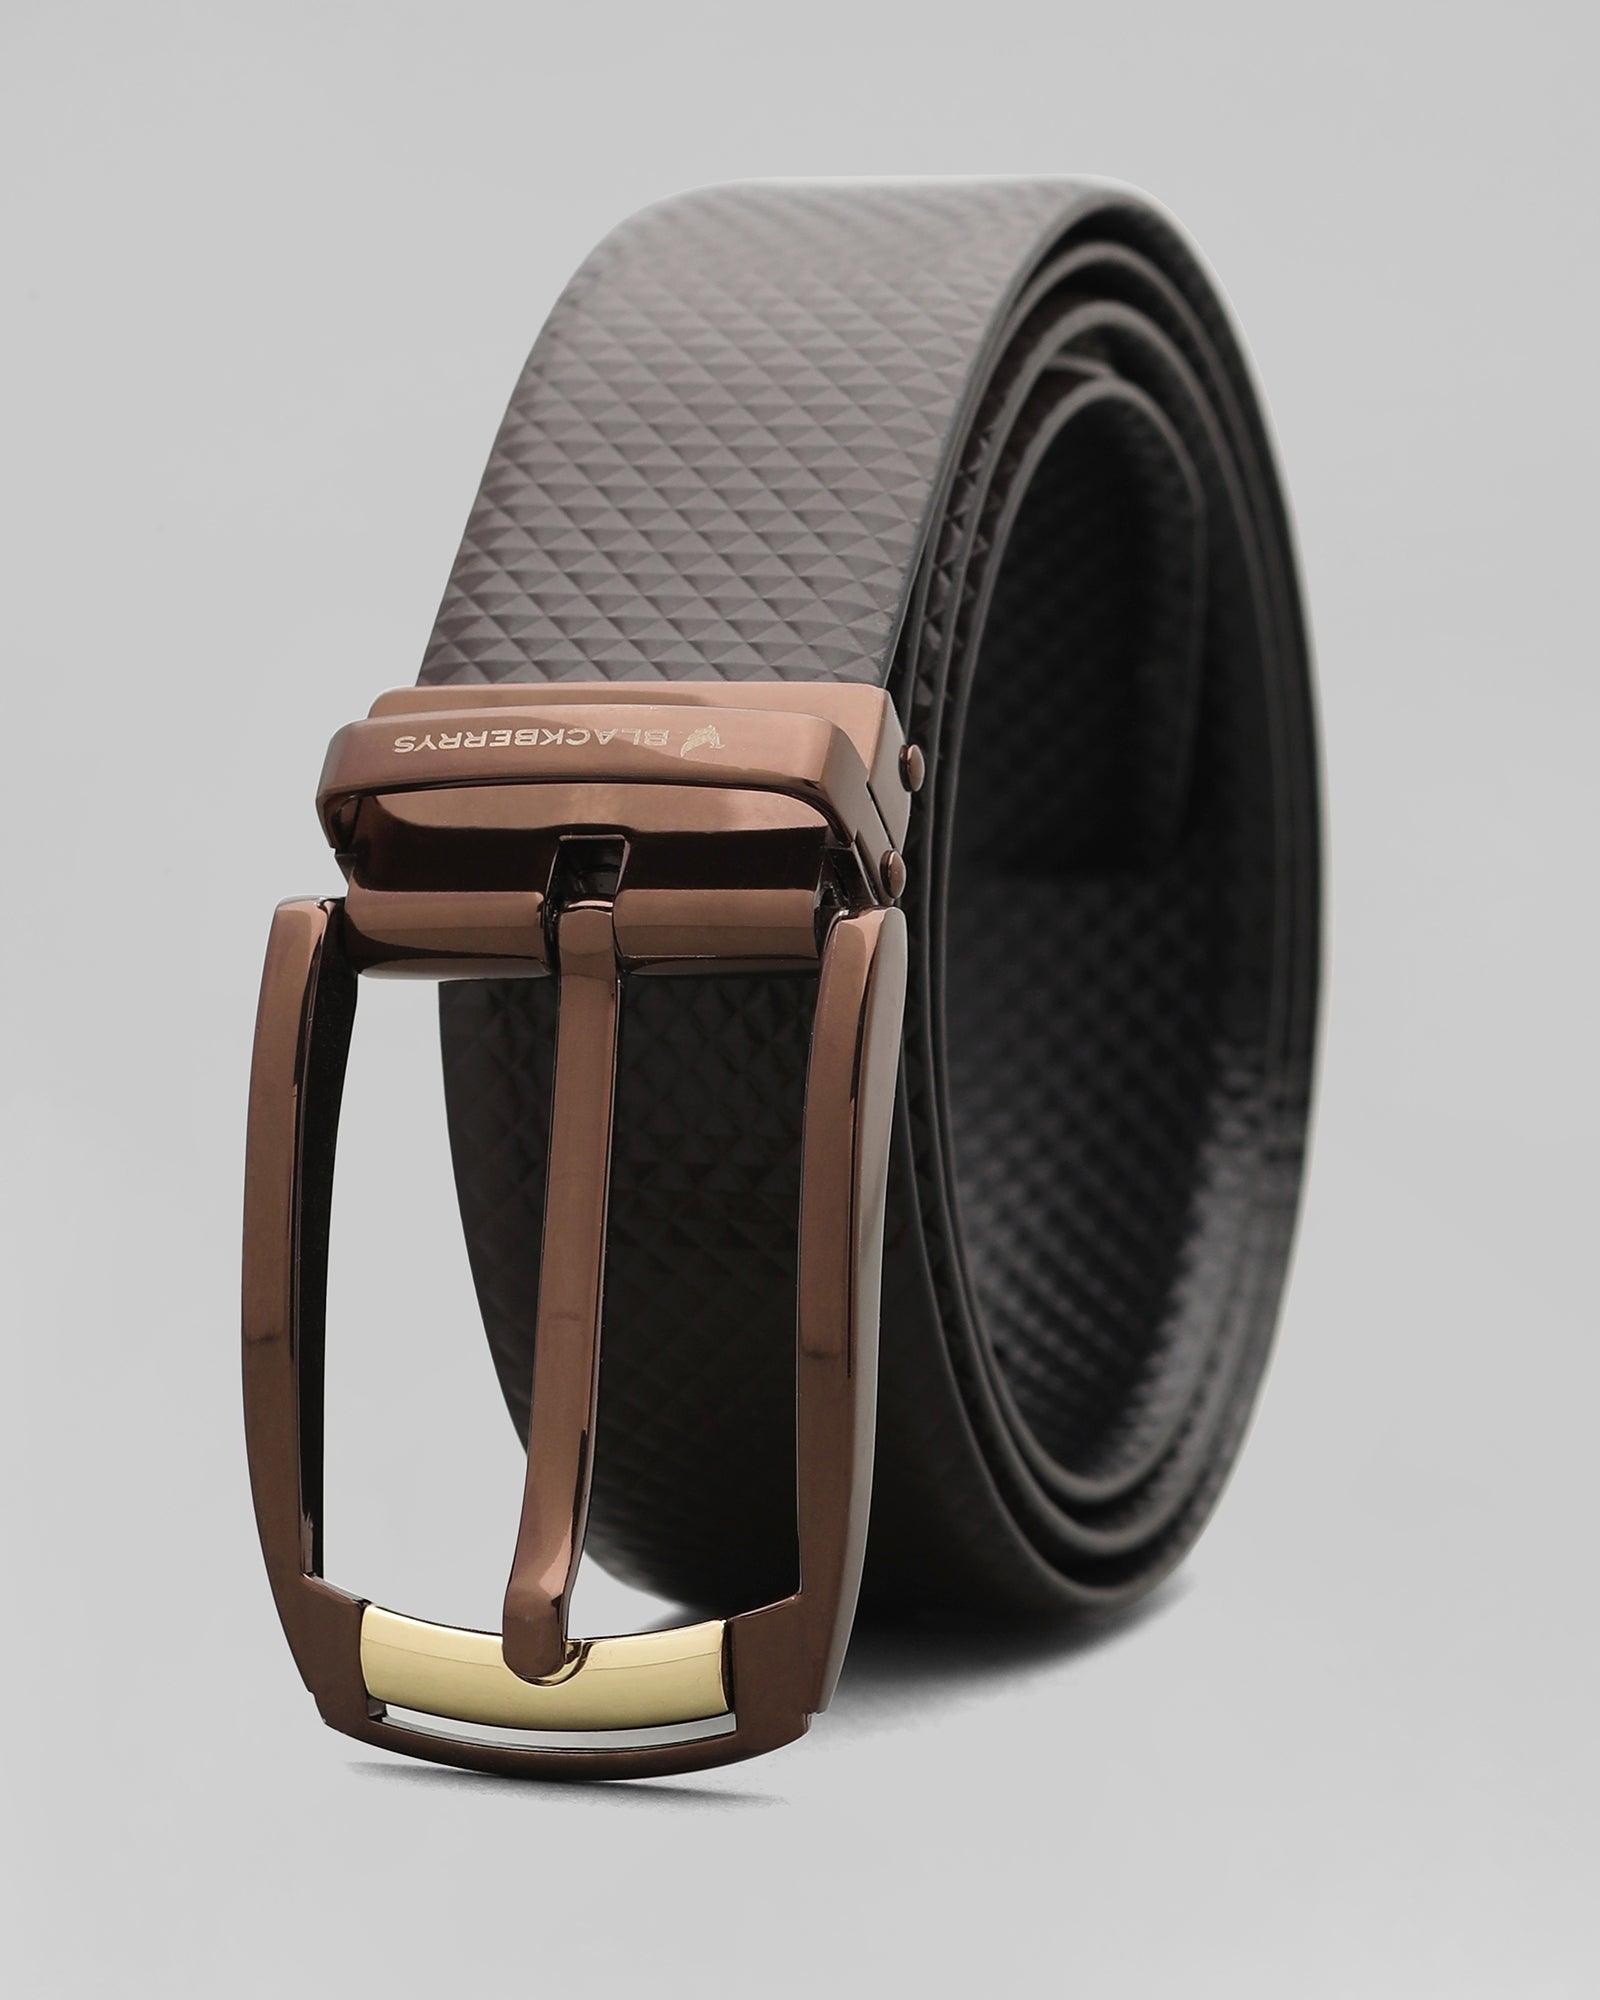 Leather Reversible Black Brown Textured Belt - Poppy